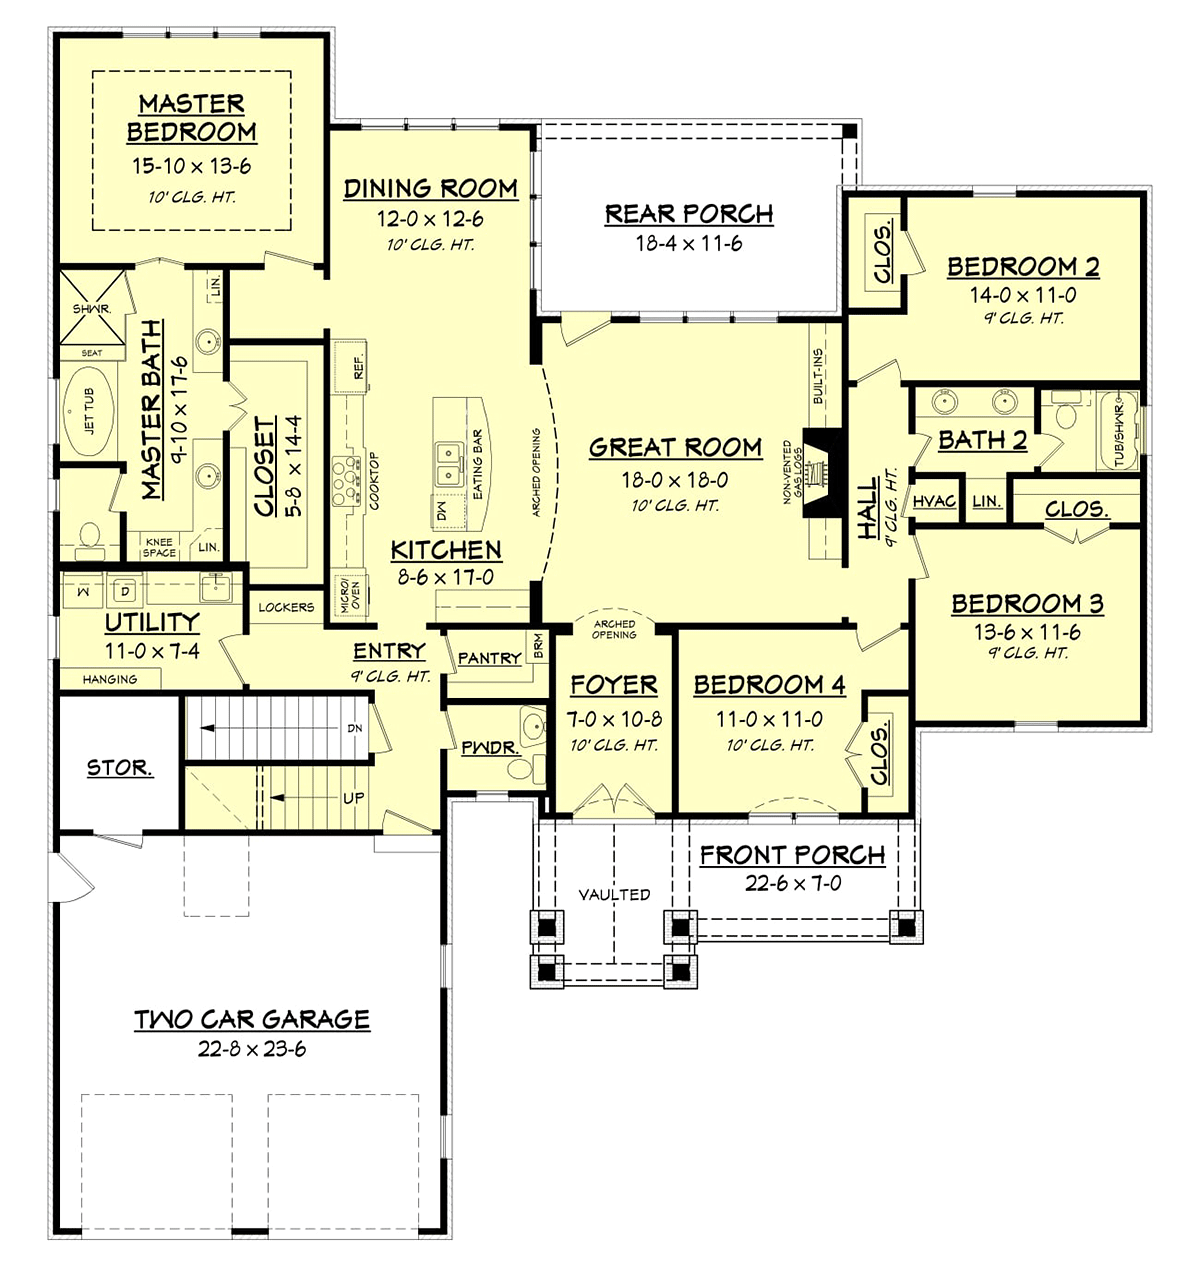 House Plan 51941 Alternate Level One